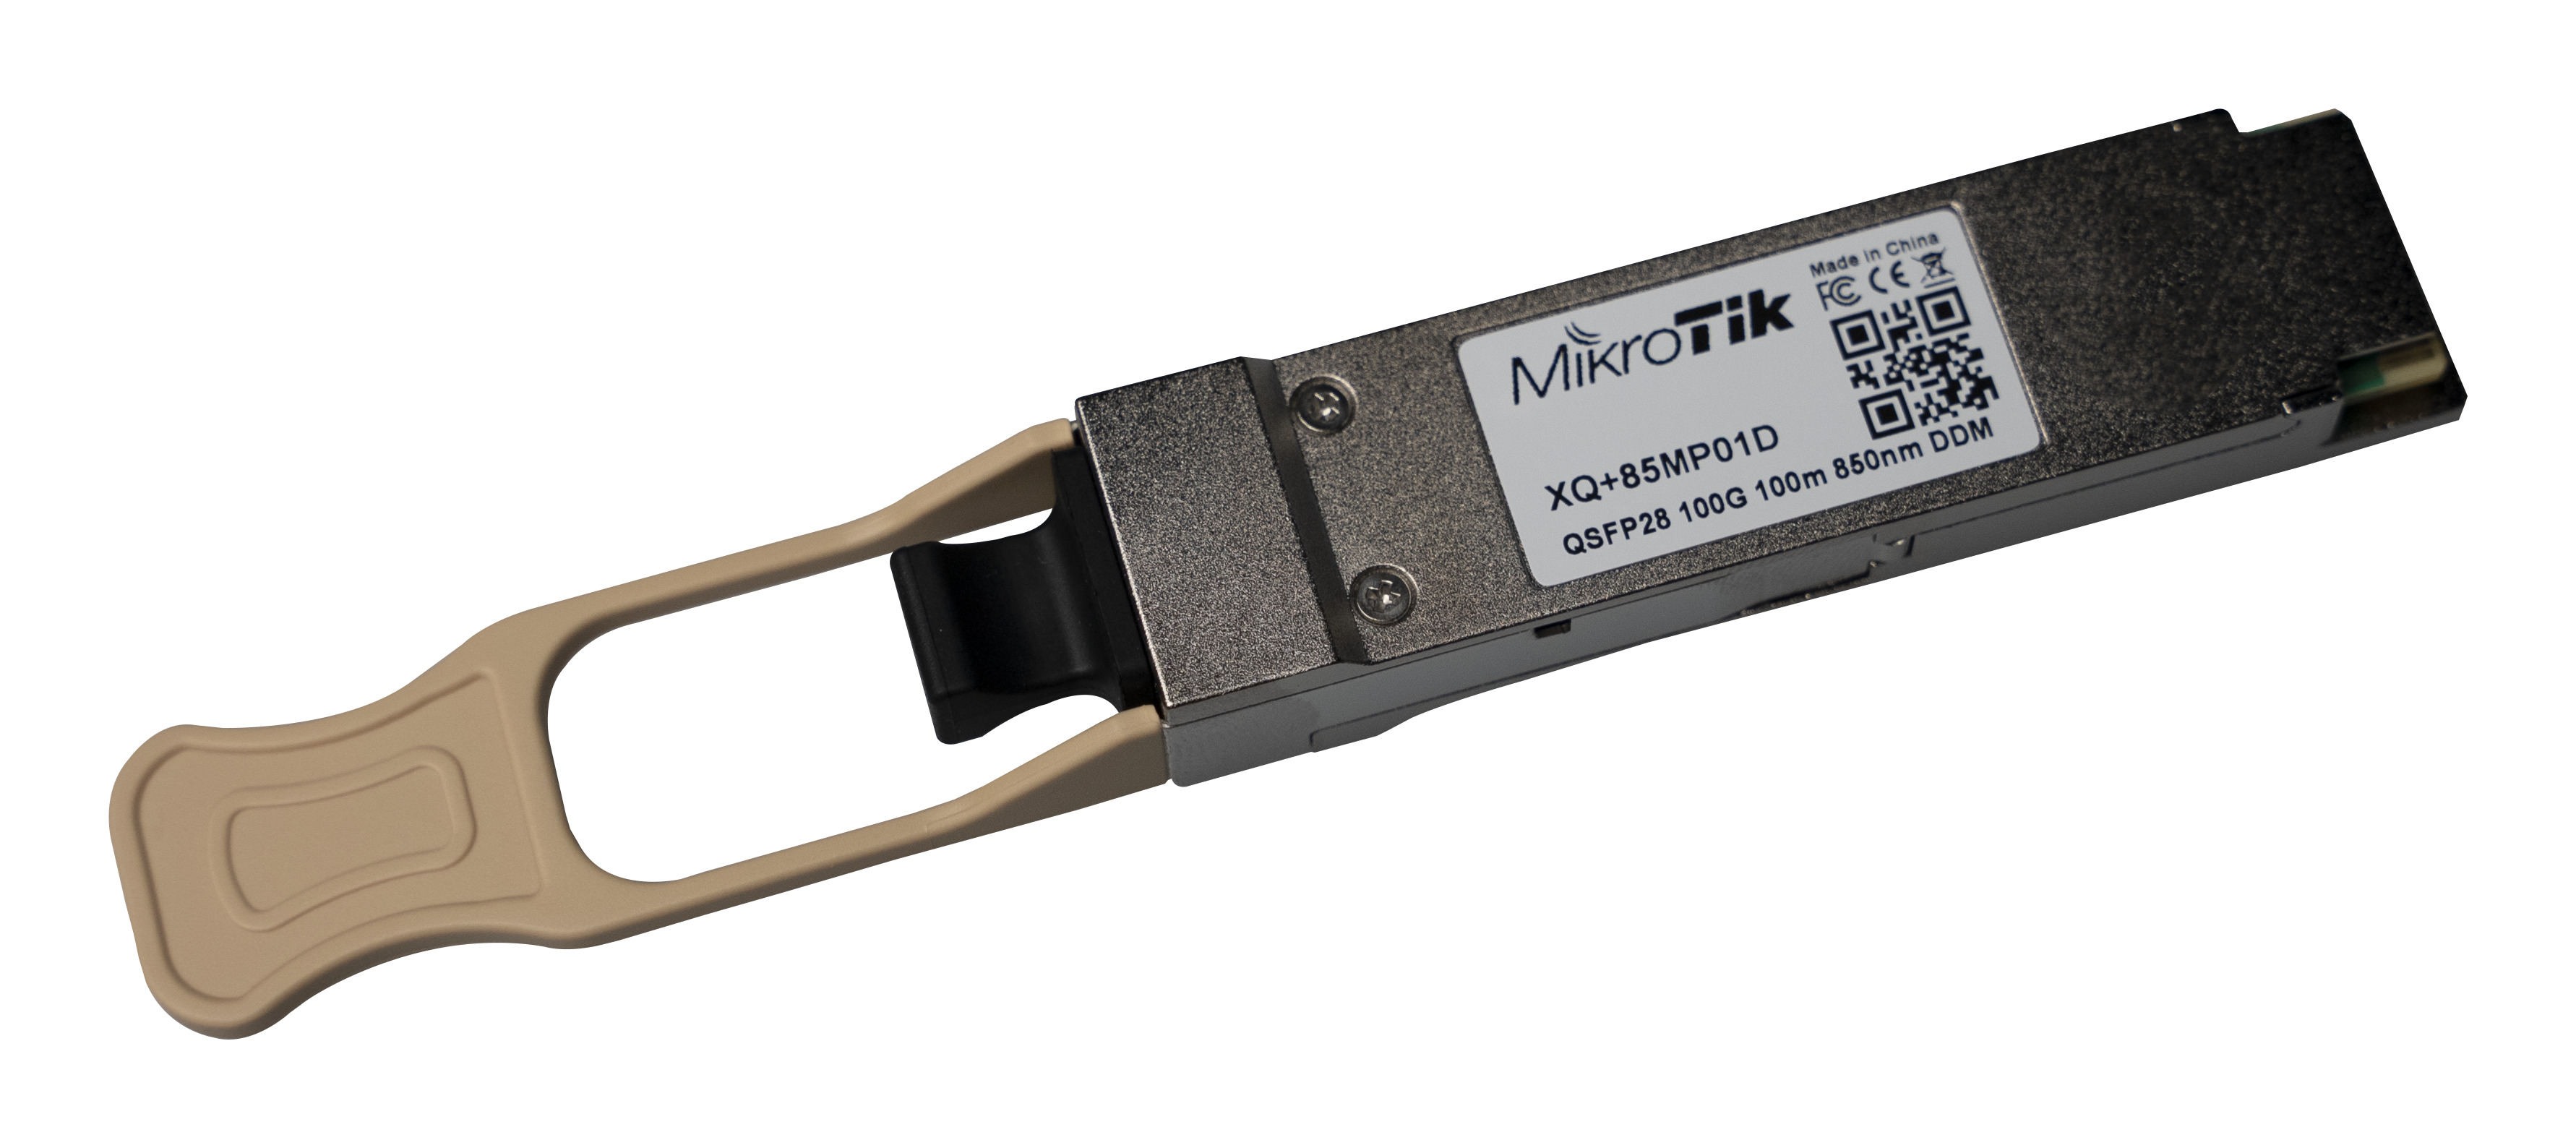 Module Mikrotik XQ+85MP01D